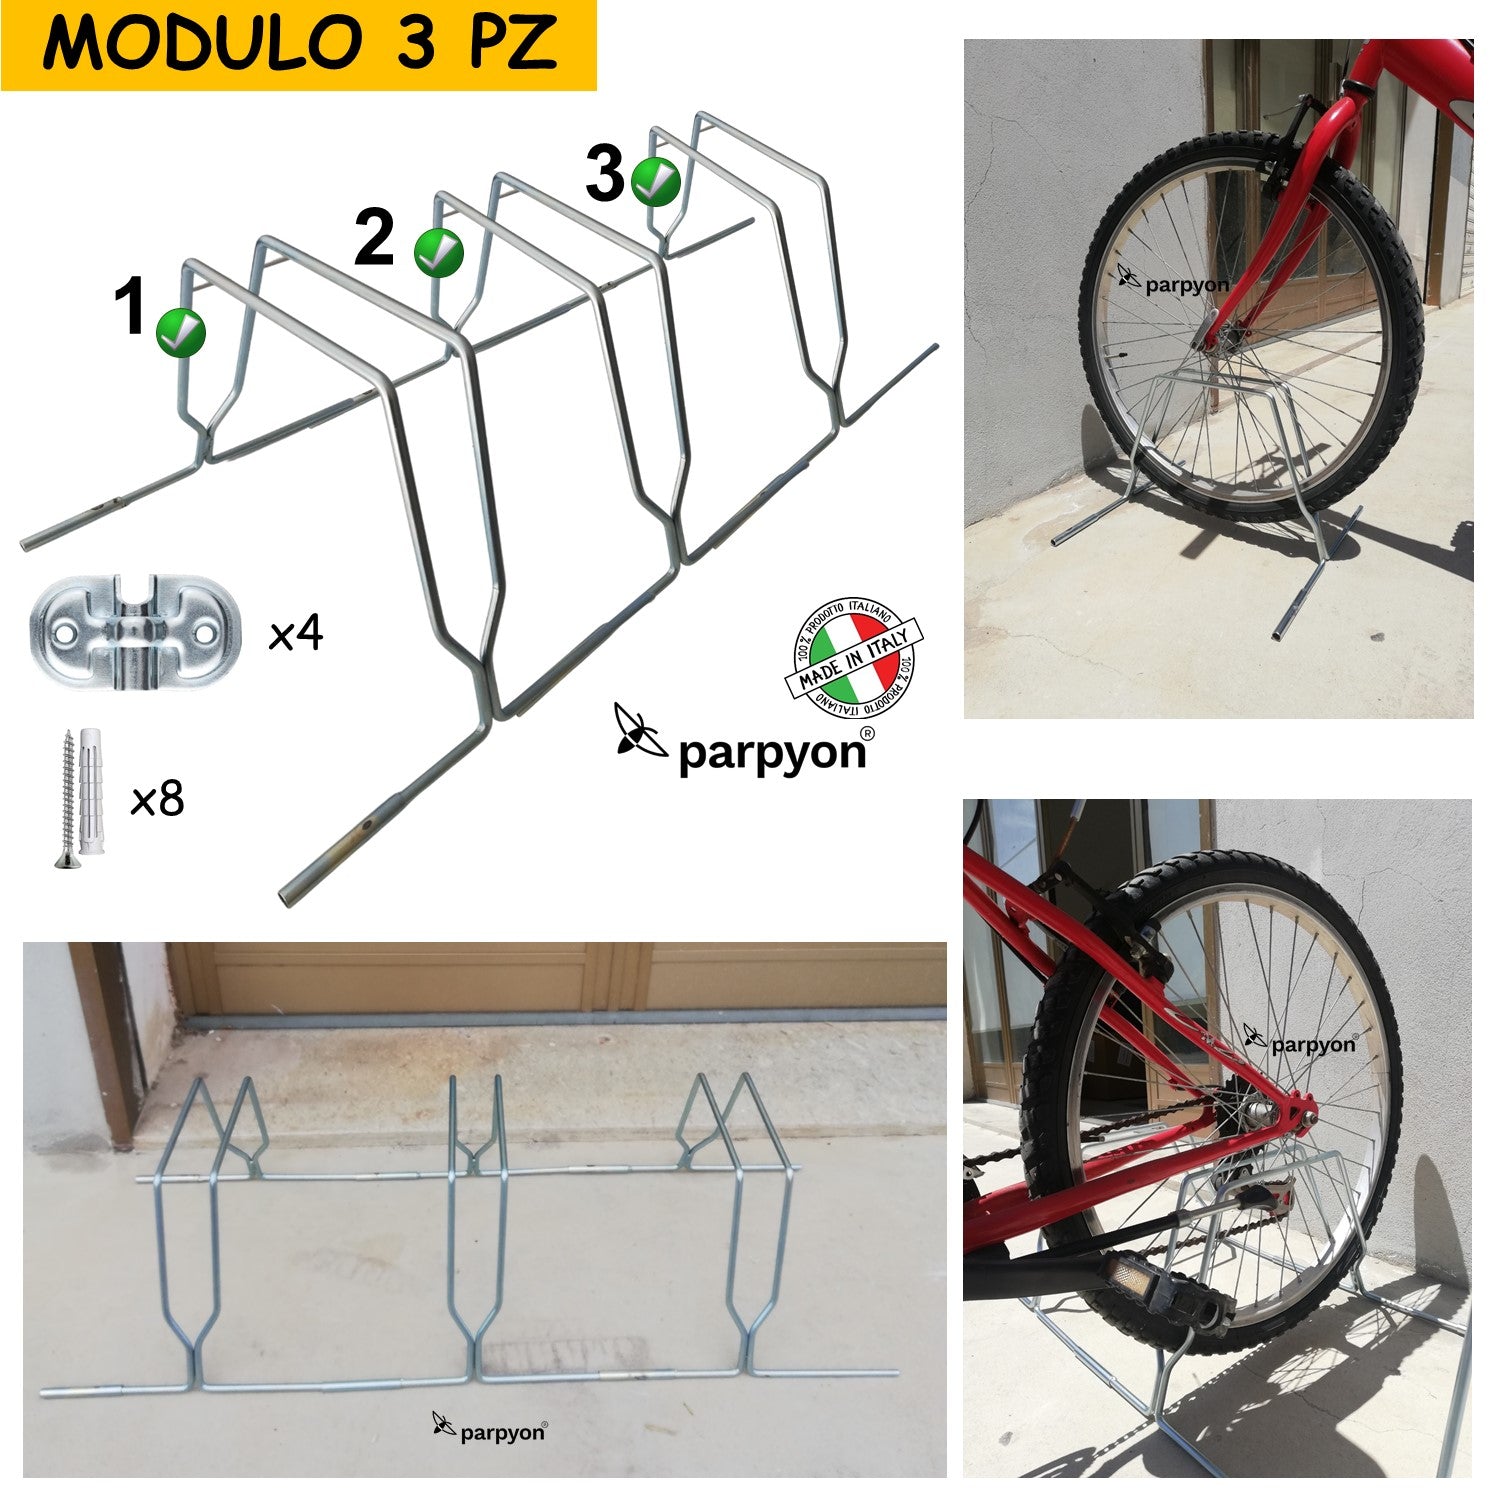 Parpyon® porta biciclette da terra n. 3 rastrelliera biciclette, porta bici